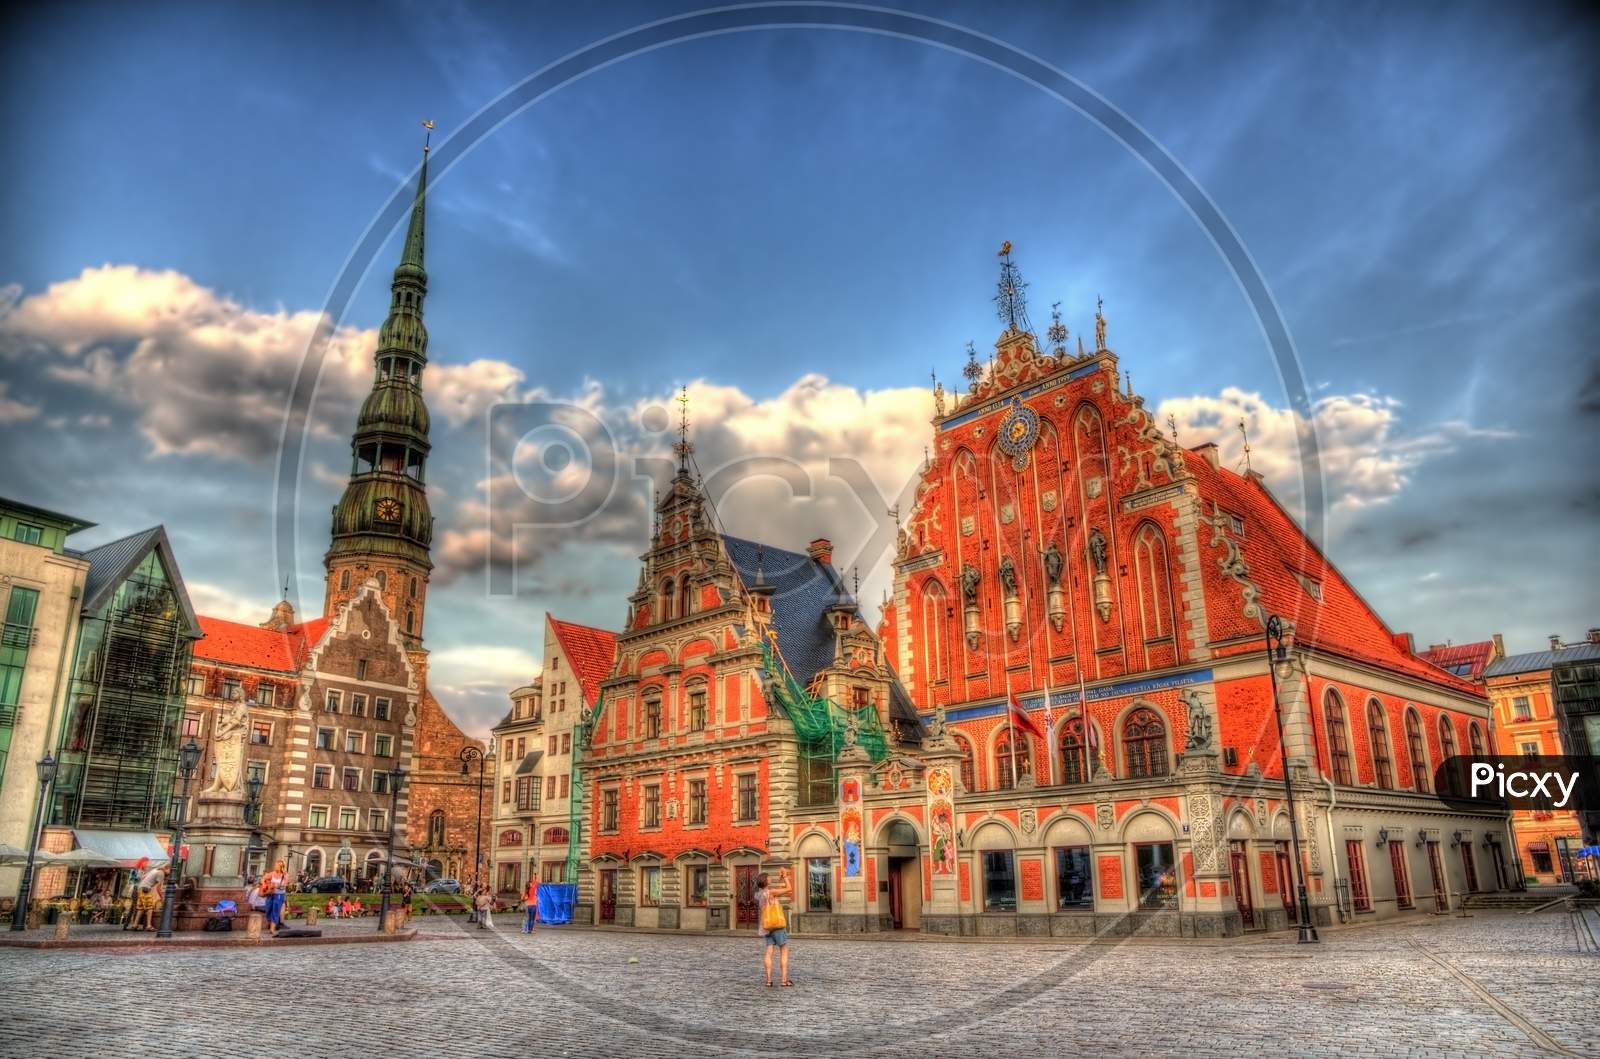 Riga Town Hall (Albert) Square - Latvia